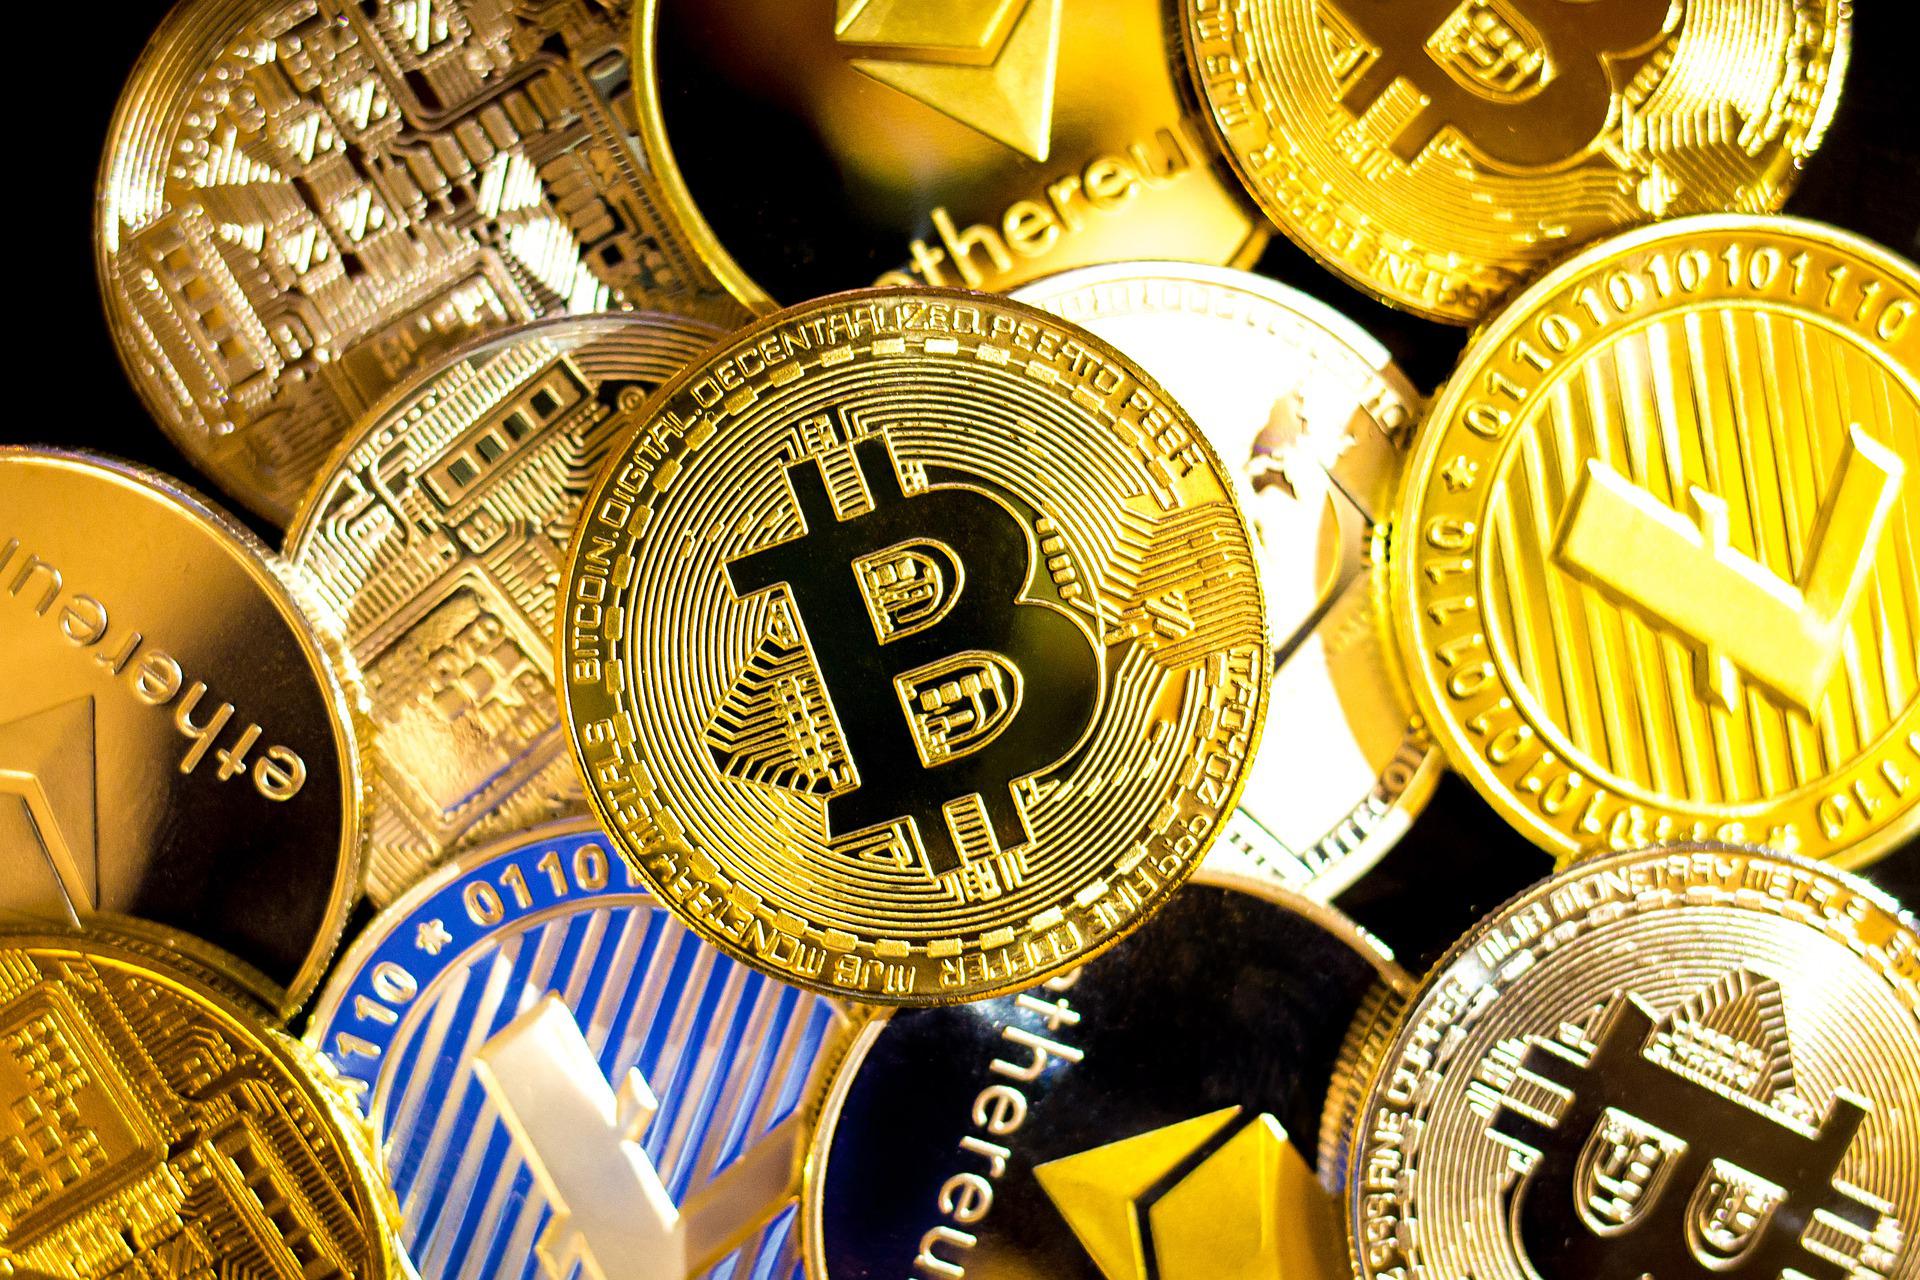 Convert 5 USD to BTC - US Dollar to Bitcoin Converter | CoinCodex